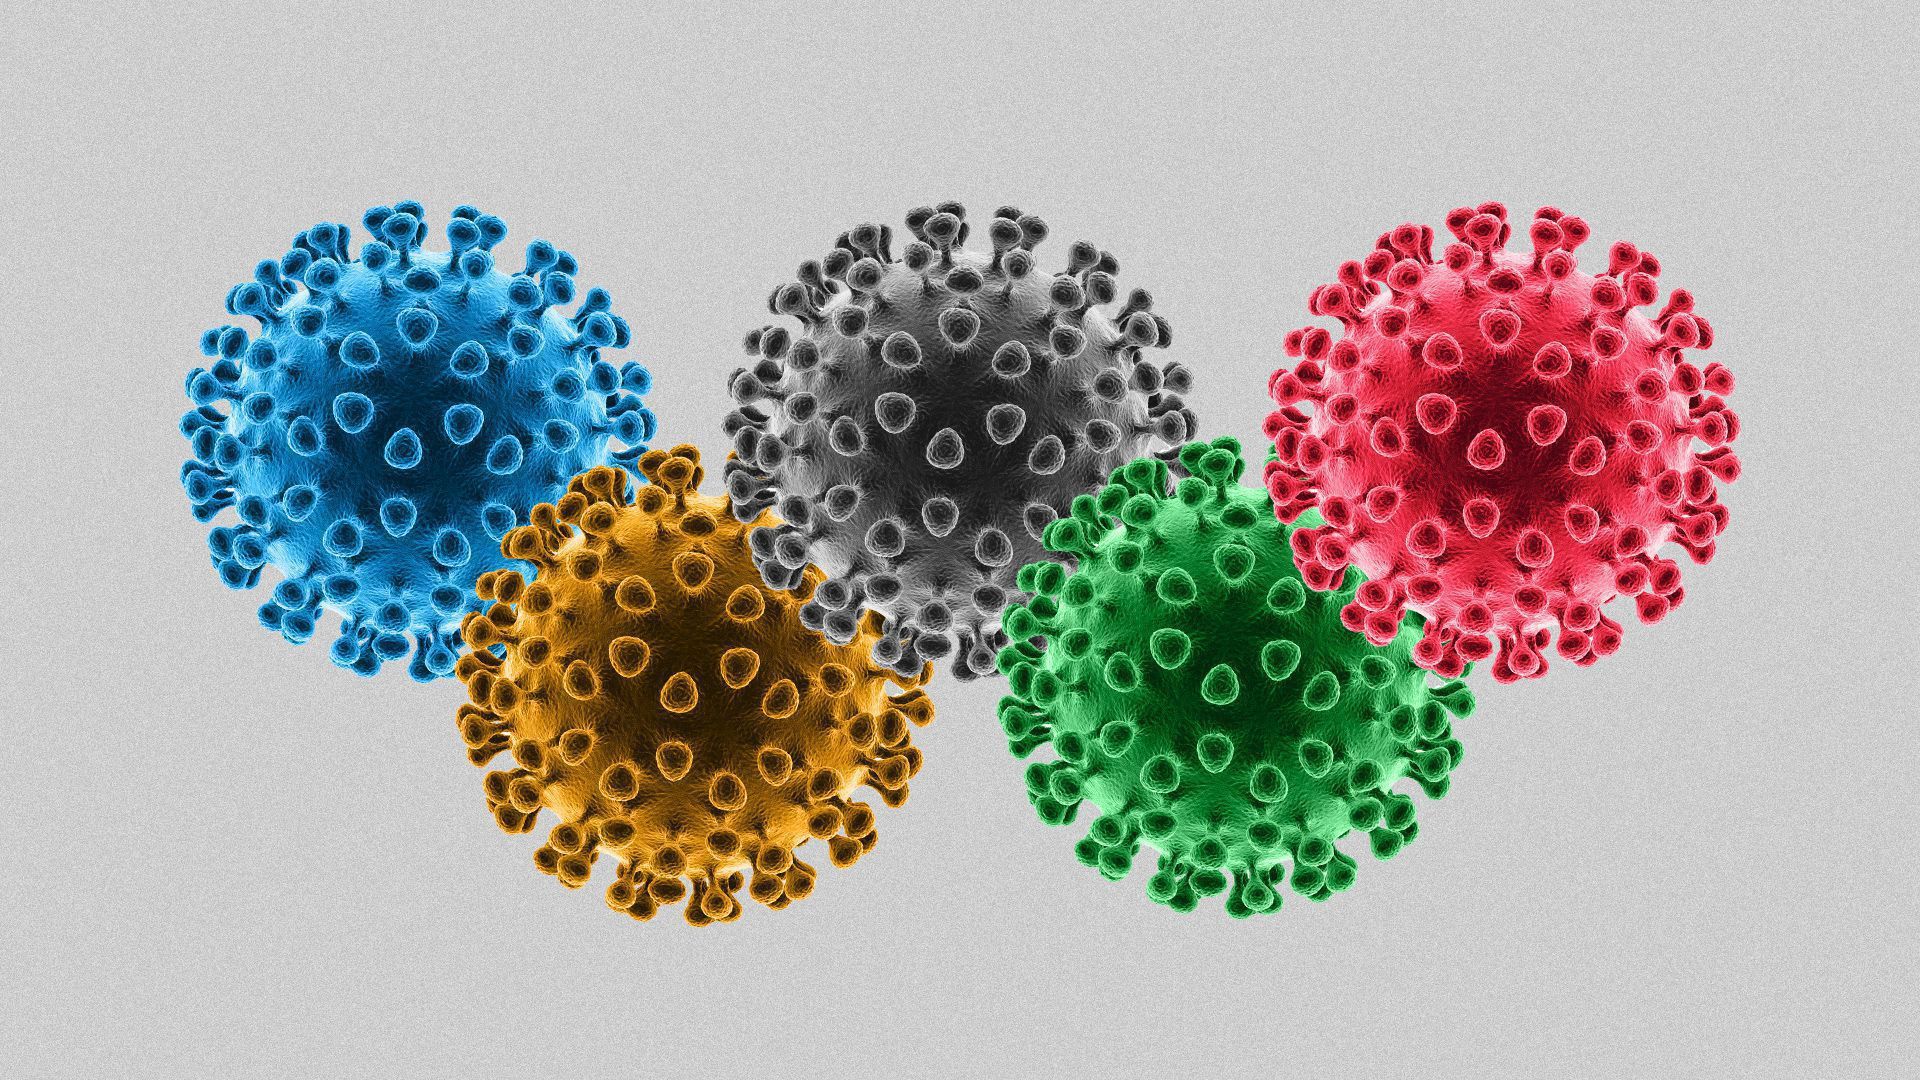 Illustration of coronavirus in the shape of the Olympic Games logo.